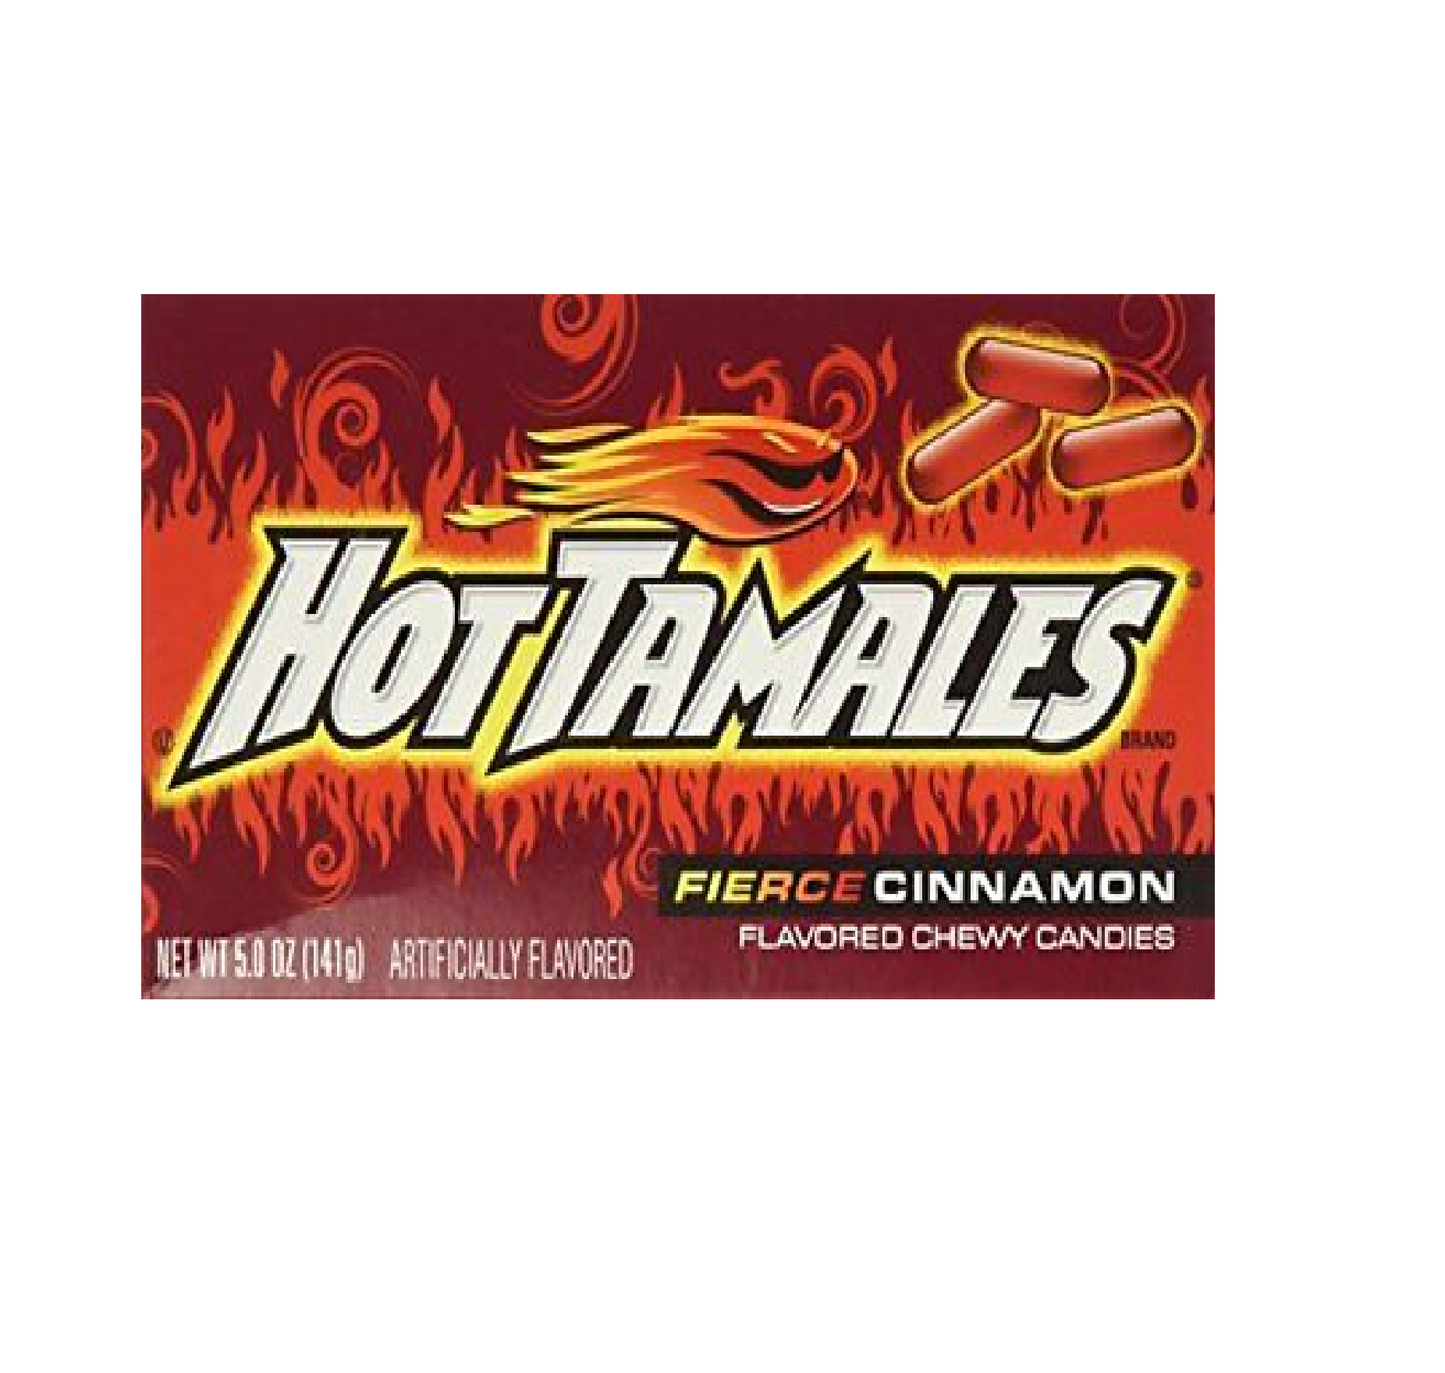 Hot Tamales Fierce Cinnamon - 141g